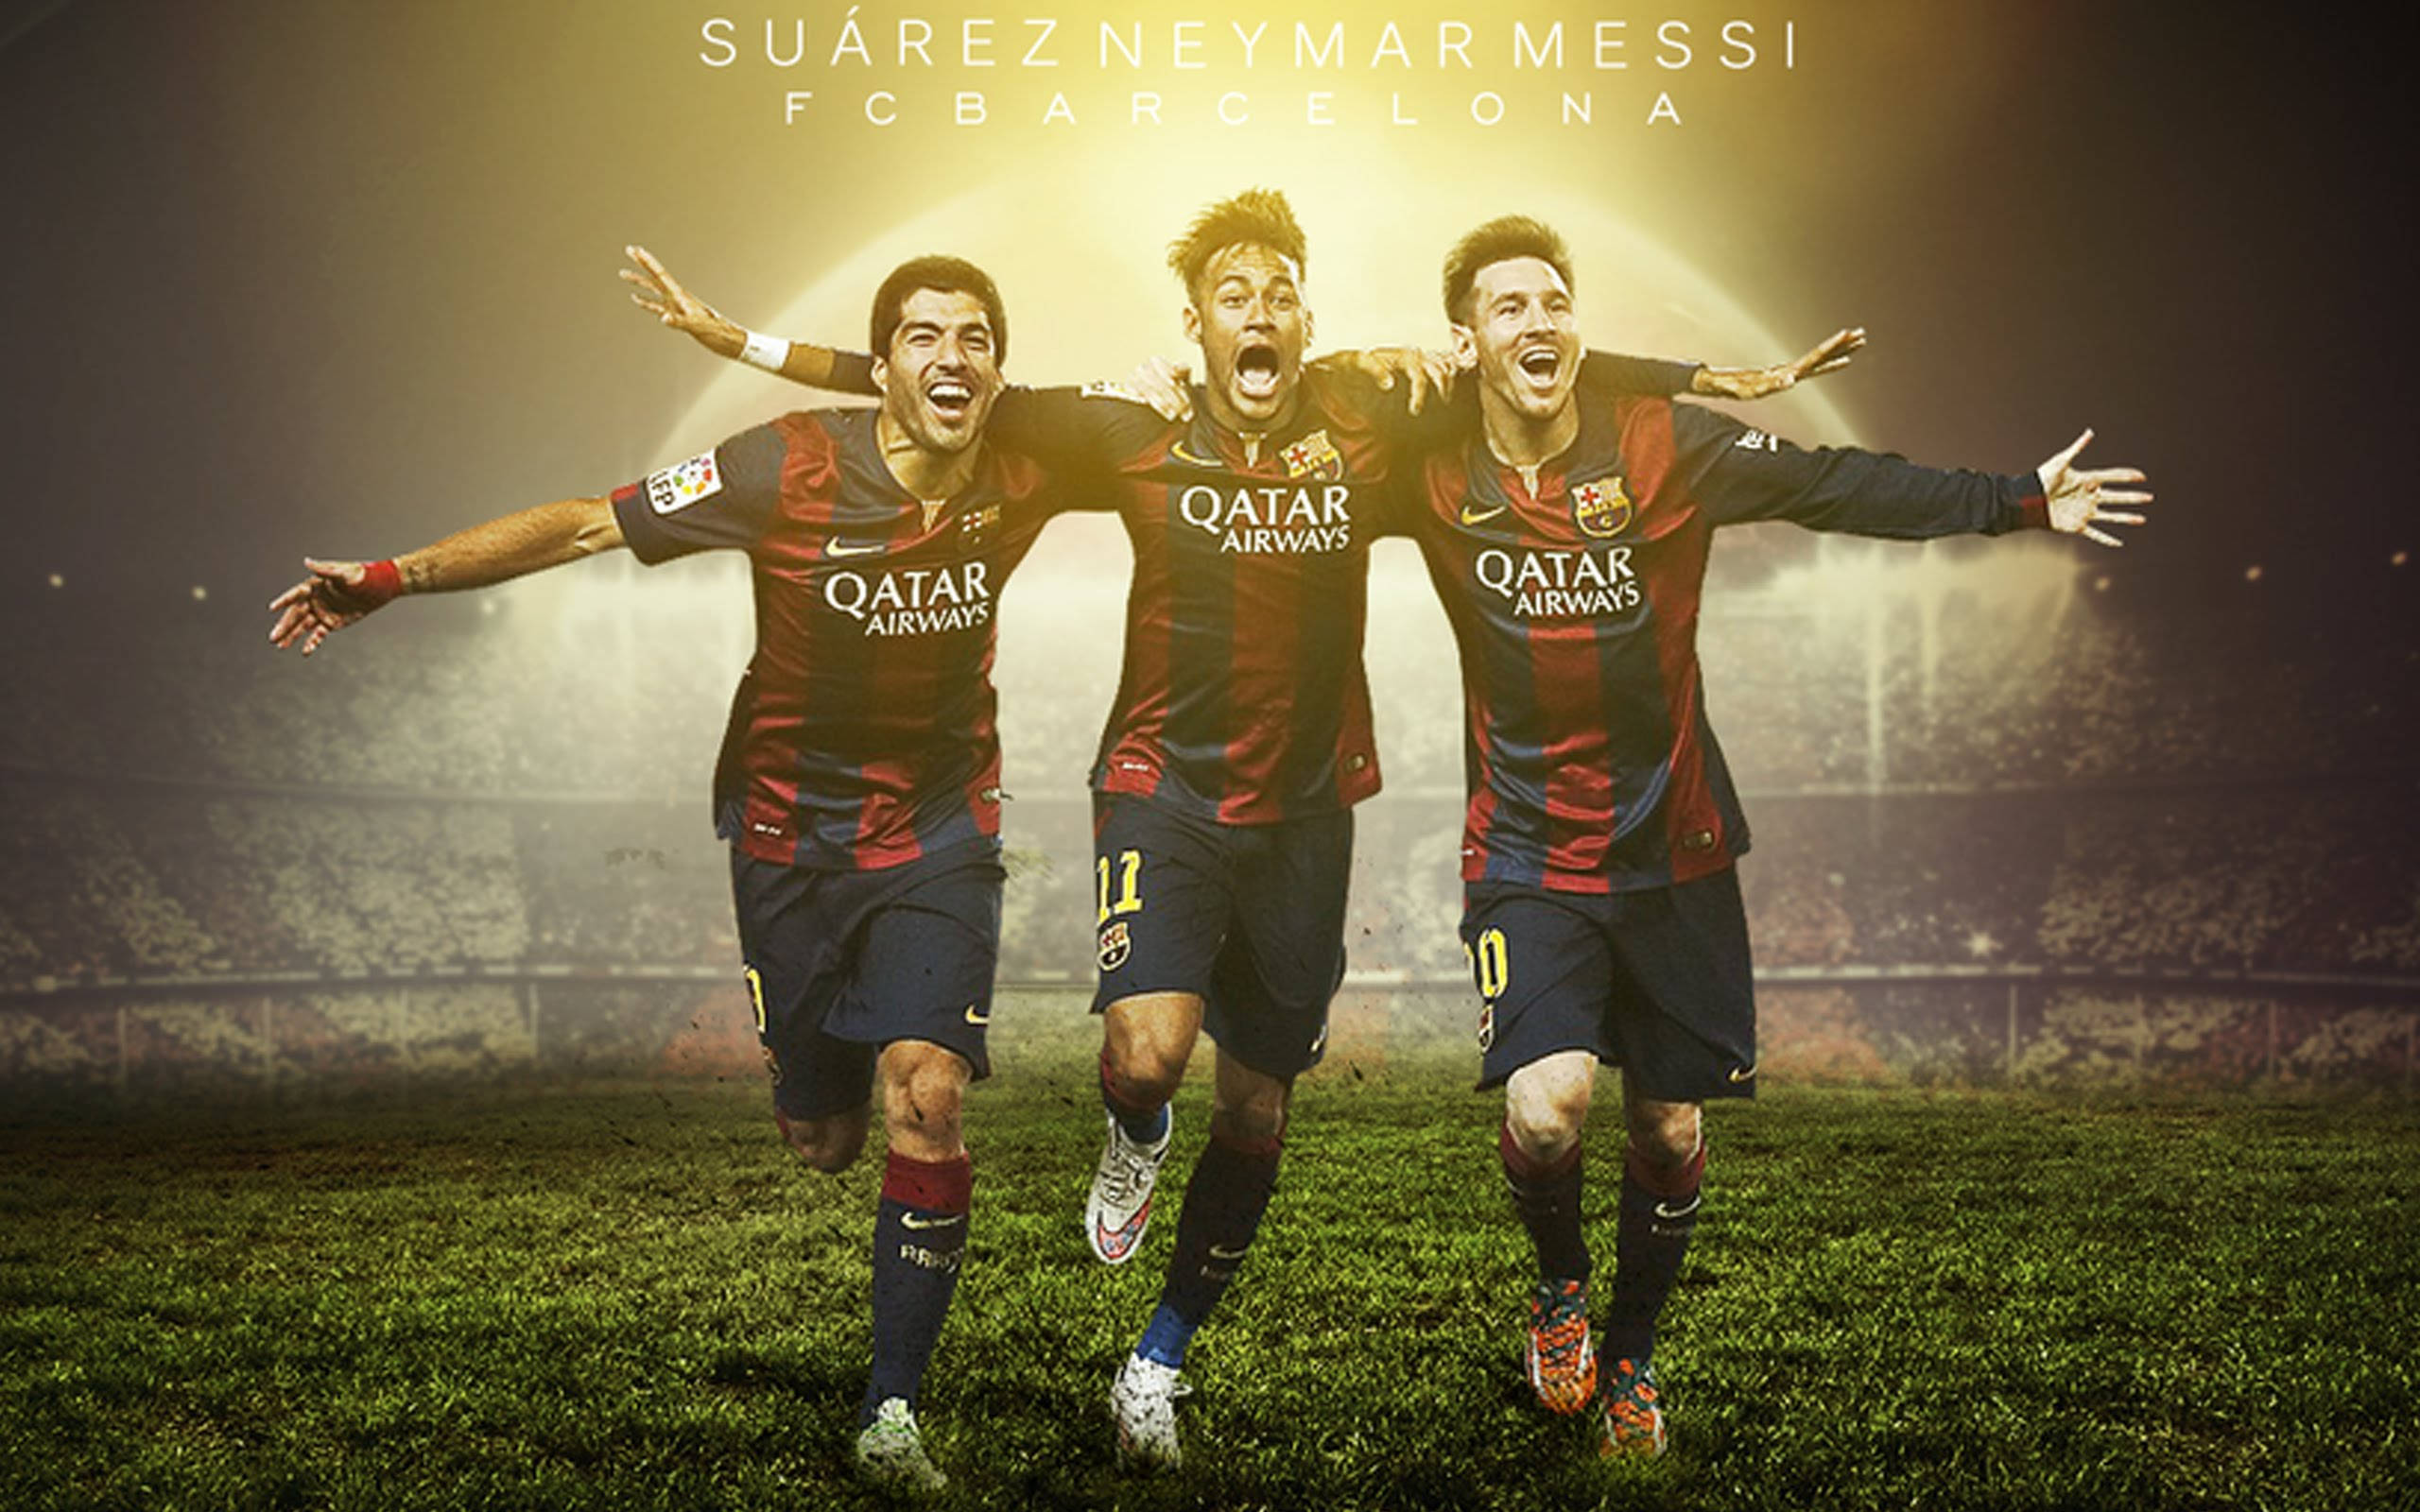 Hình nền bộ 3 MNS Messi Neymar Suarez